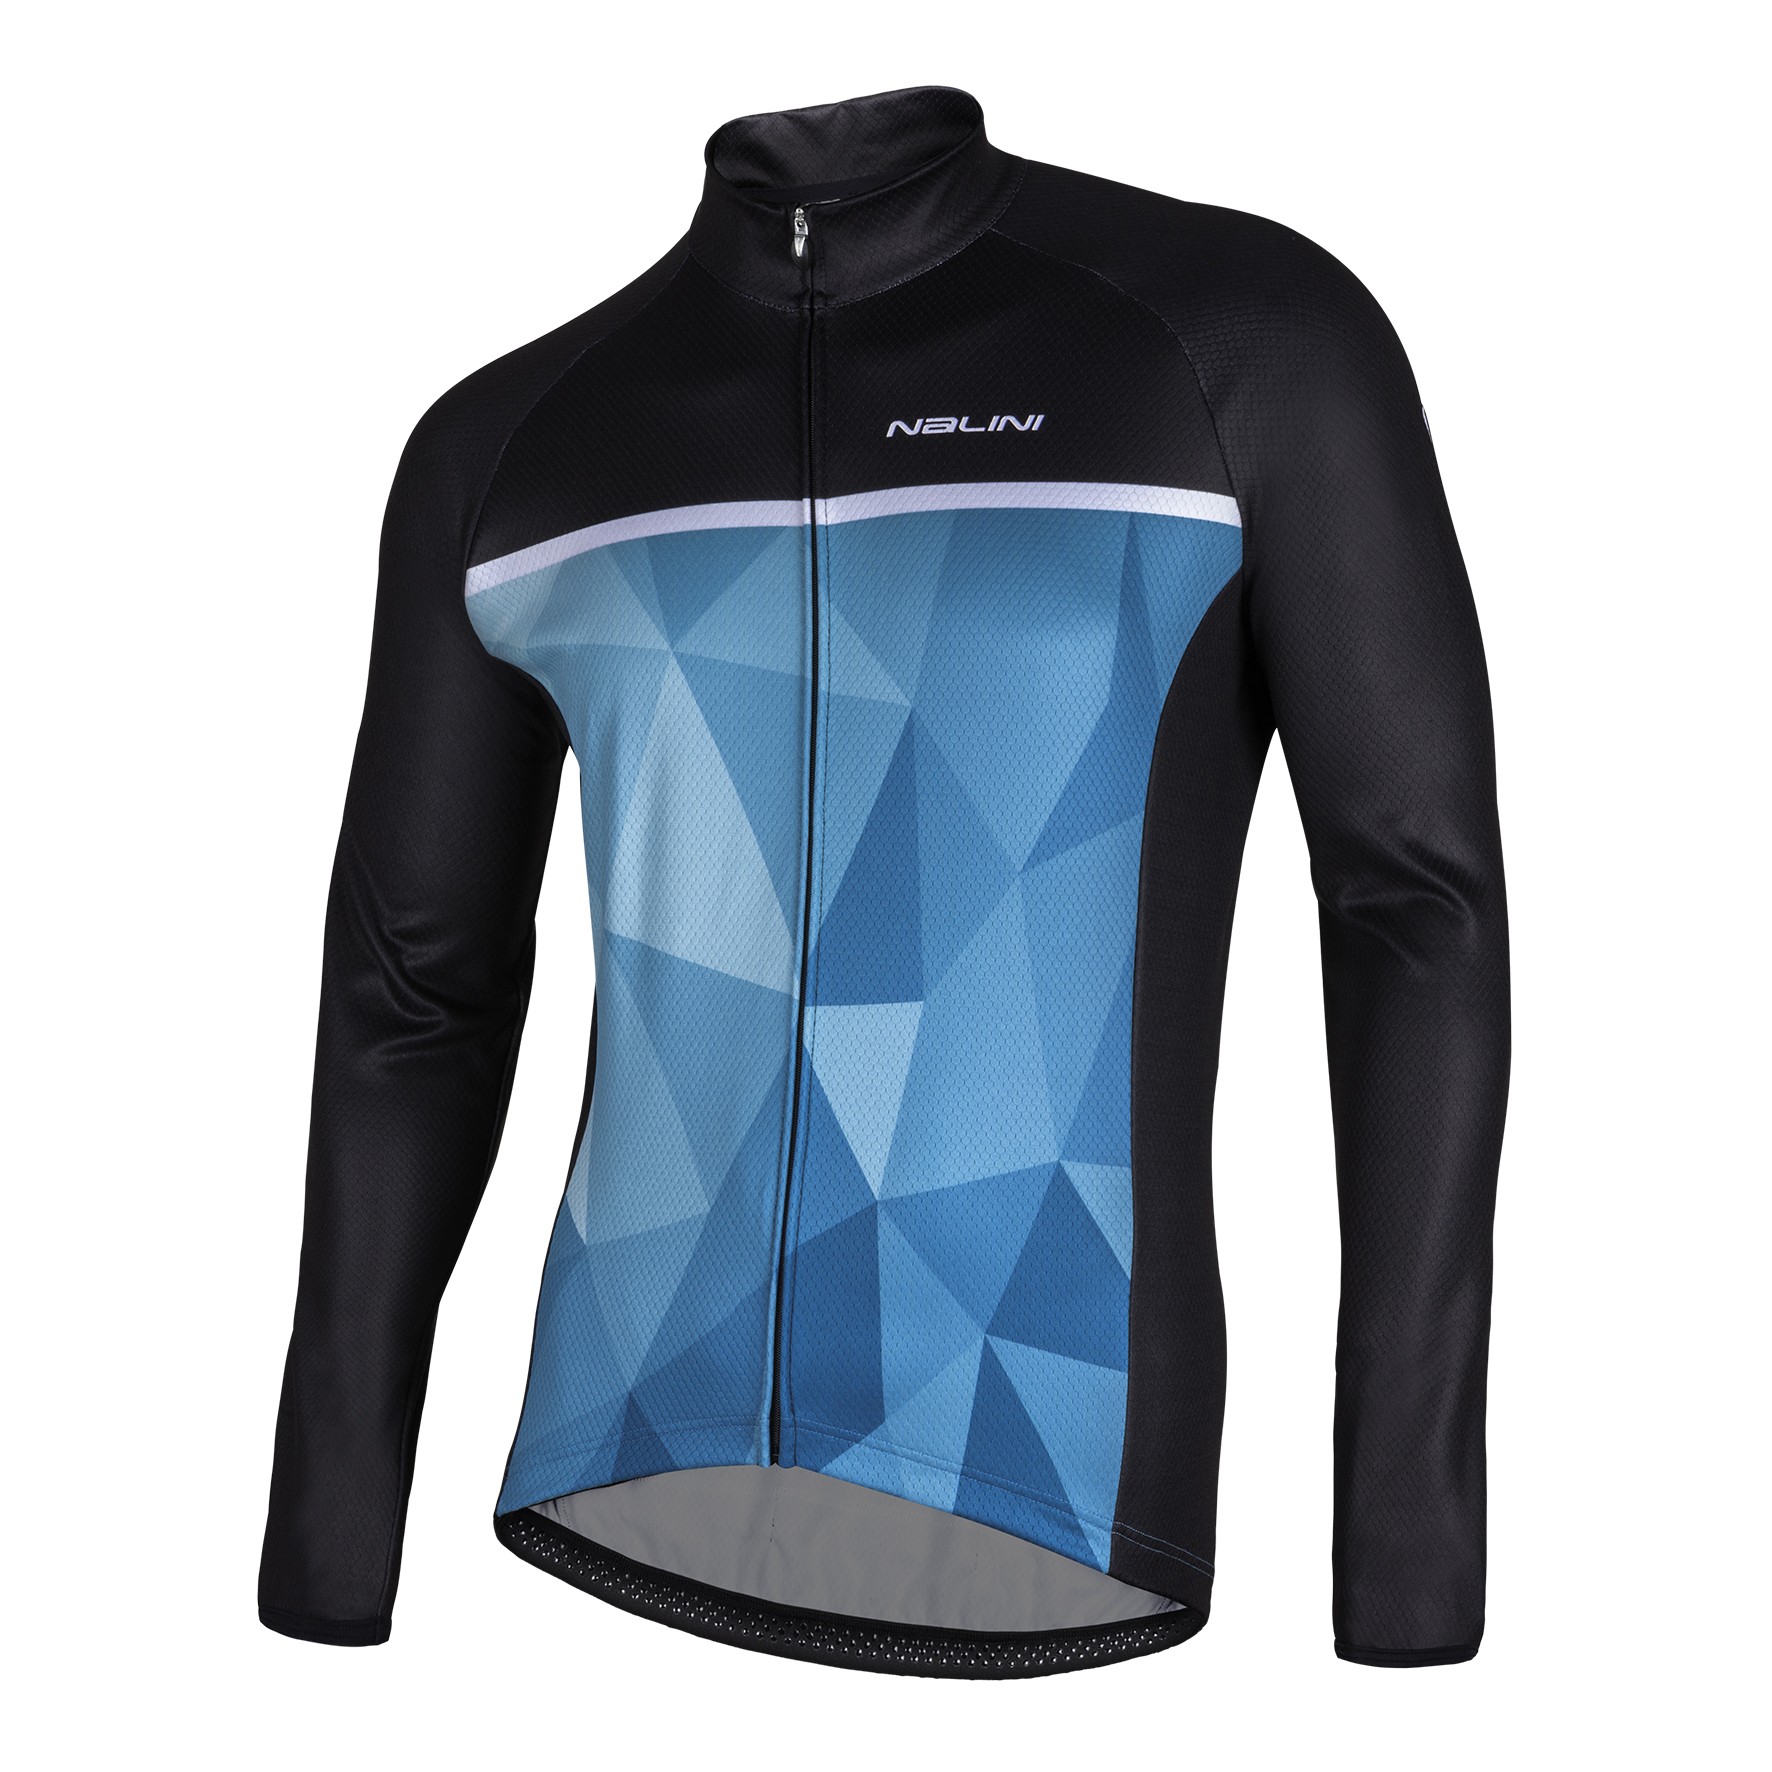 Nalini Algol maillot de cyclisme manches longues bleu noir